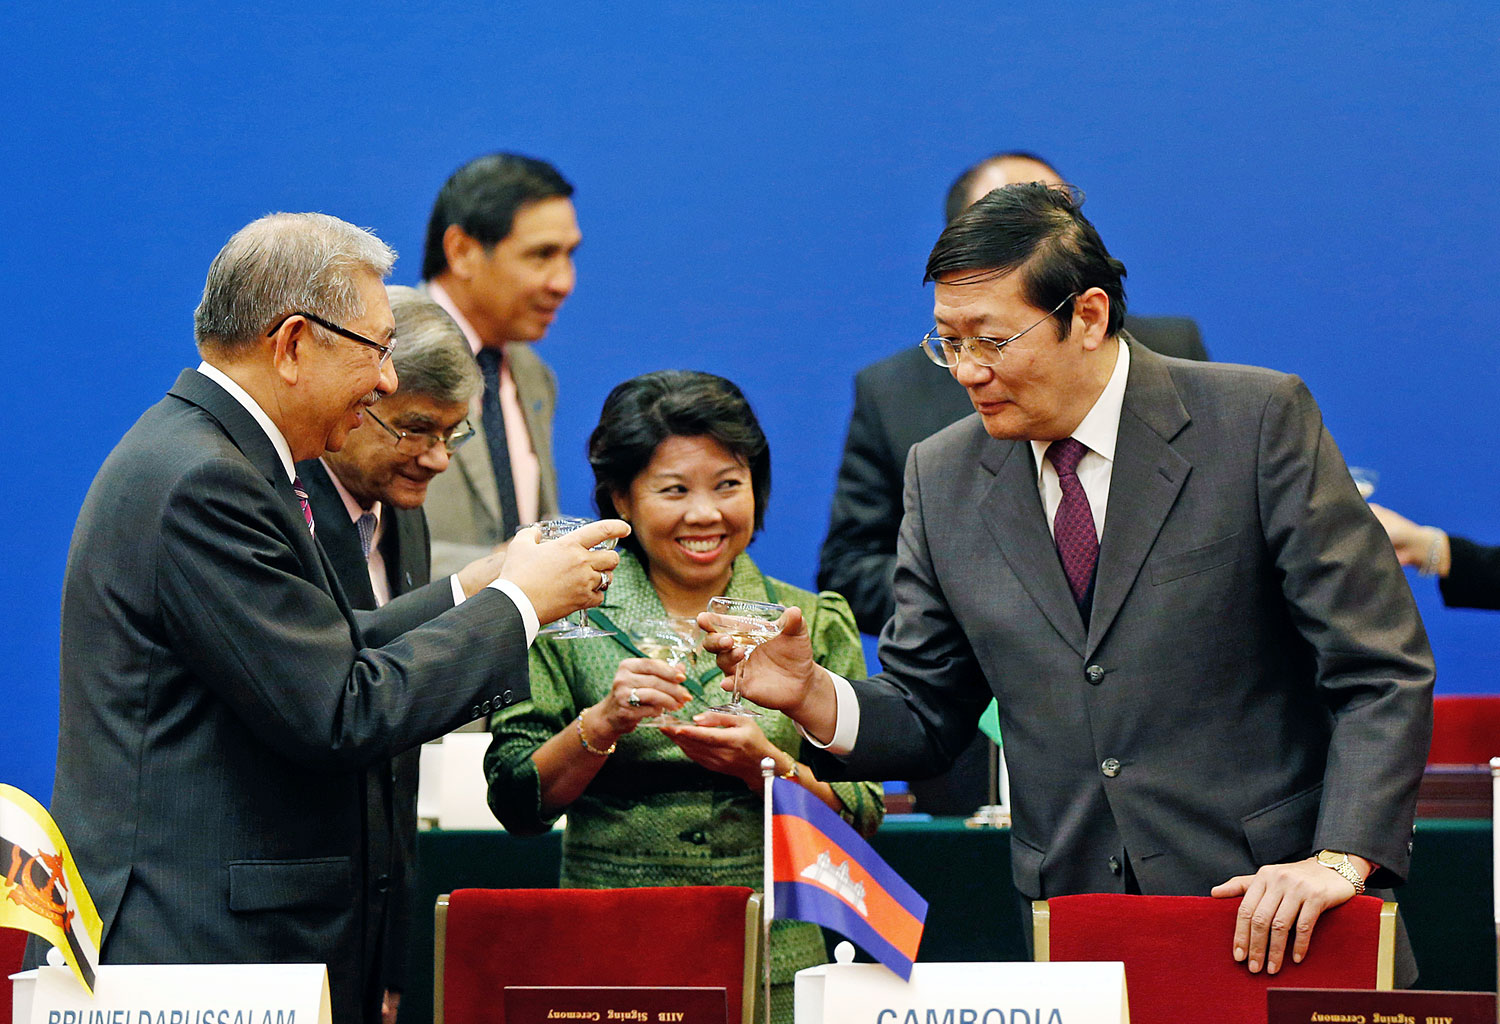 Ázsiai vezetők koccintanak sikerekre